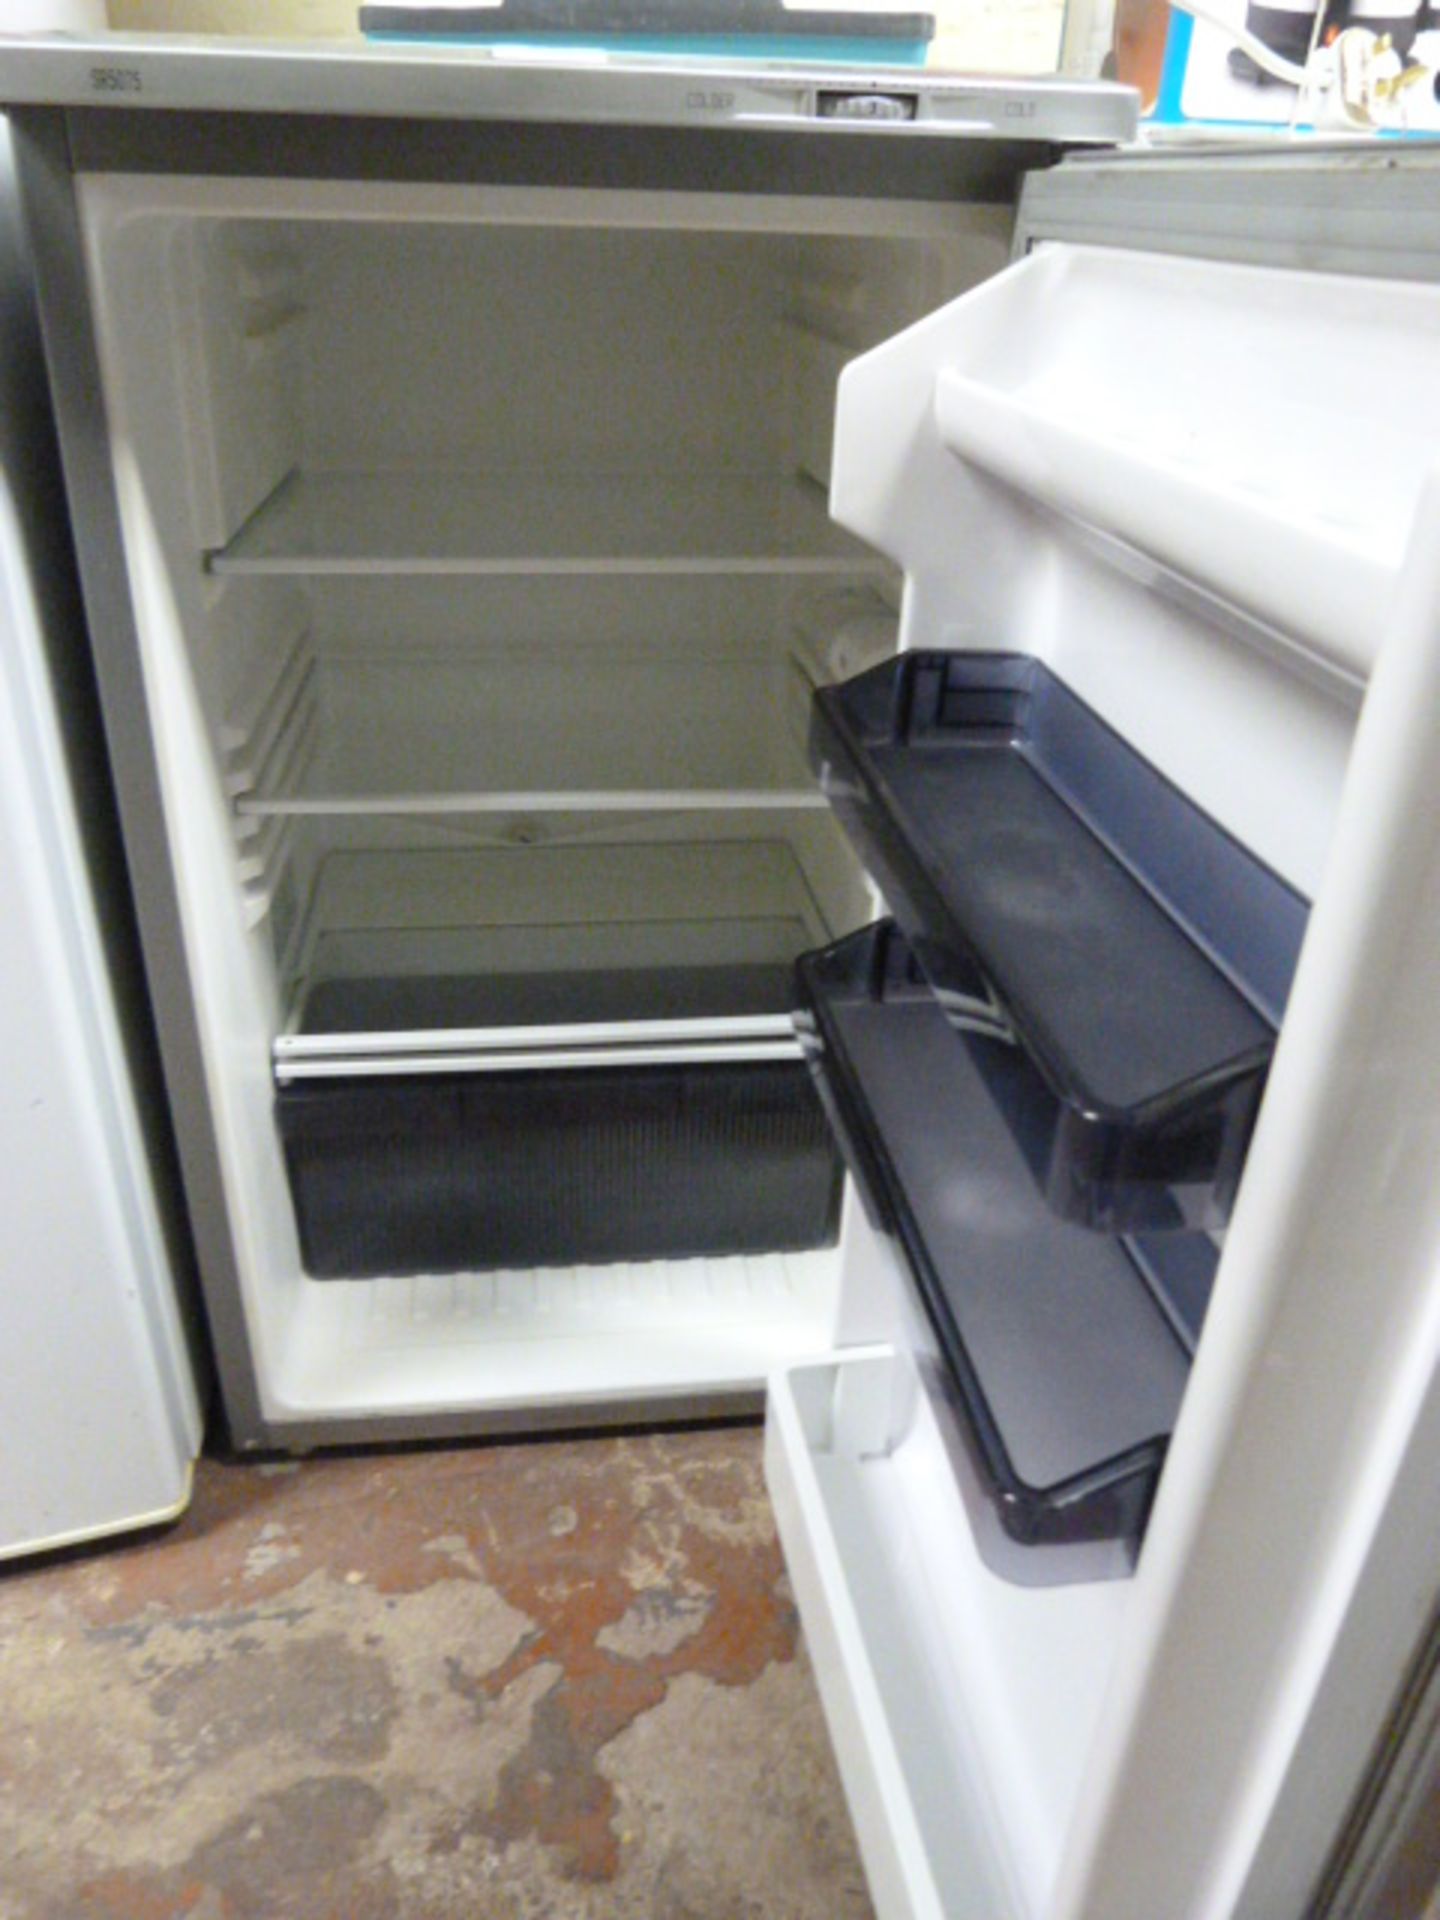 *Swan SR5075 Undercounter Refrigerator